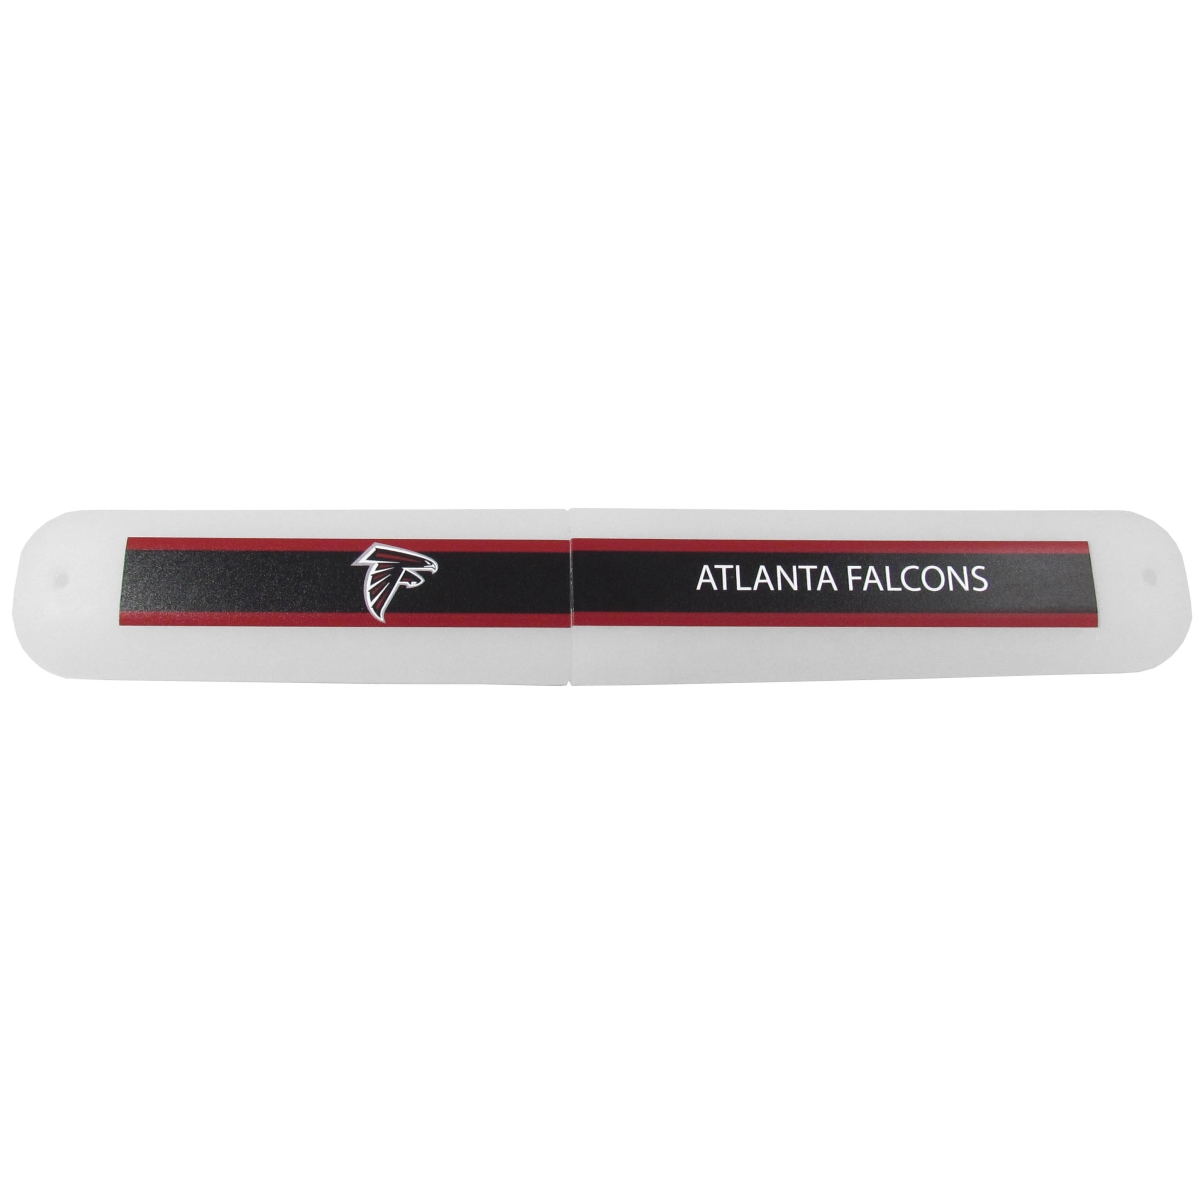 Picture of Siskiyou FTBC070 Unisex NFL Atlanta Falcons Travel Toothbrush Case - One Size